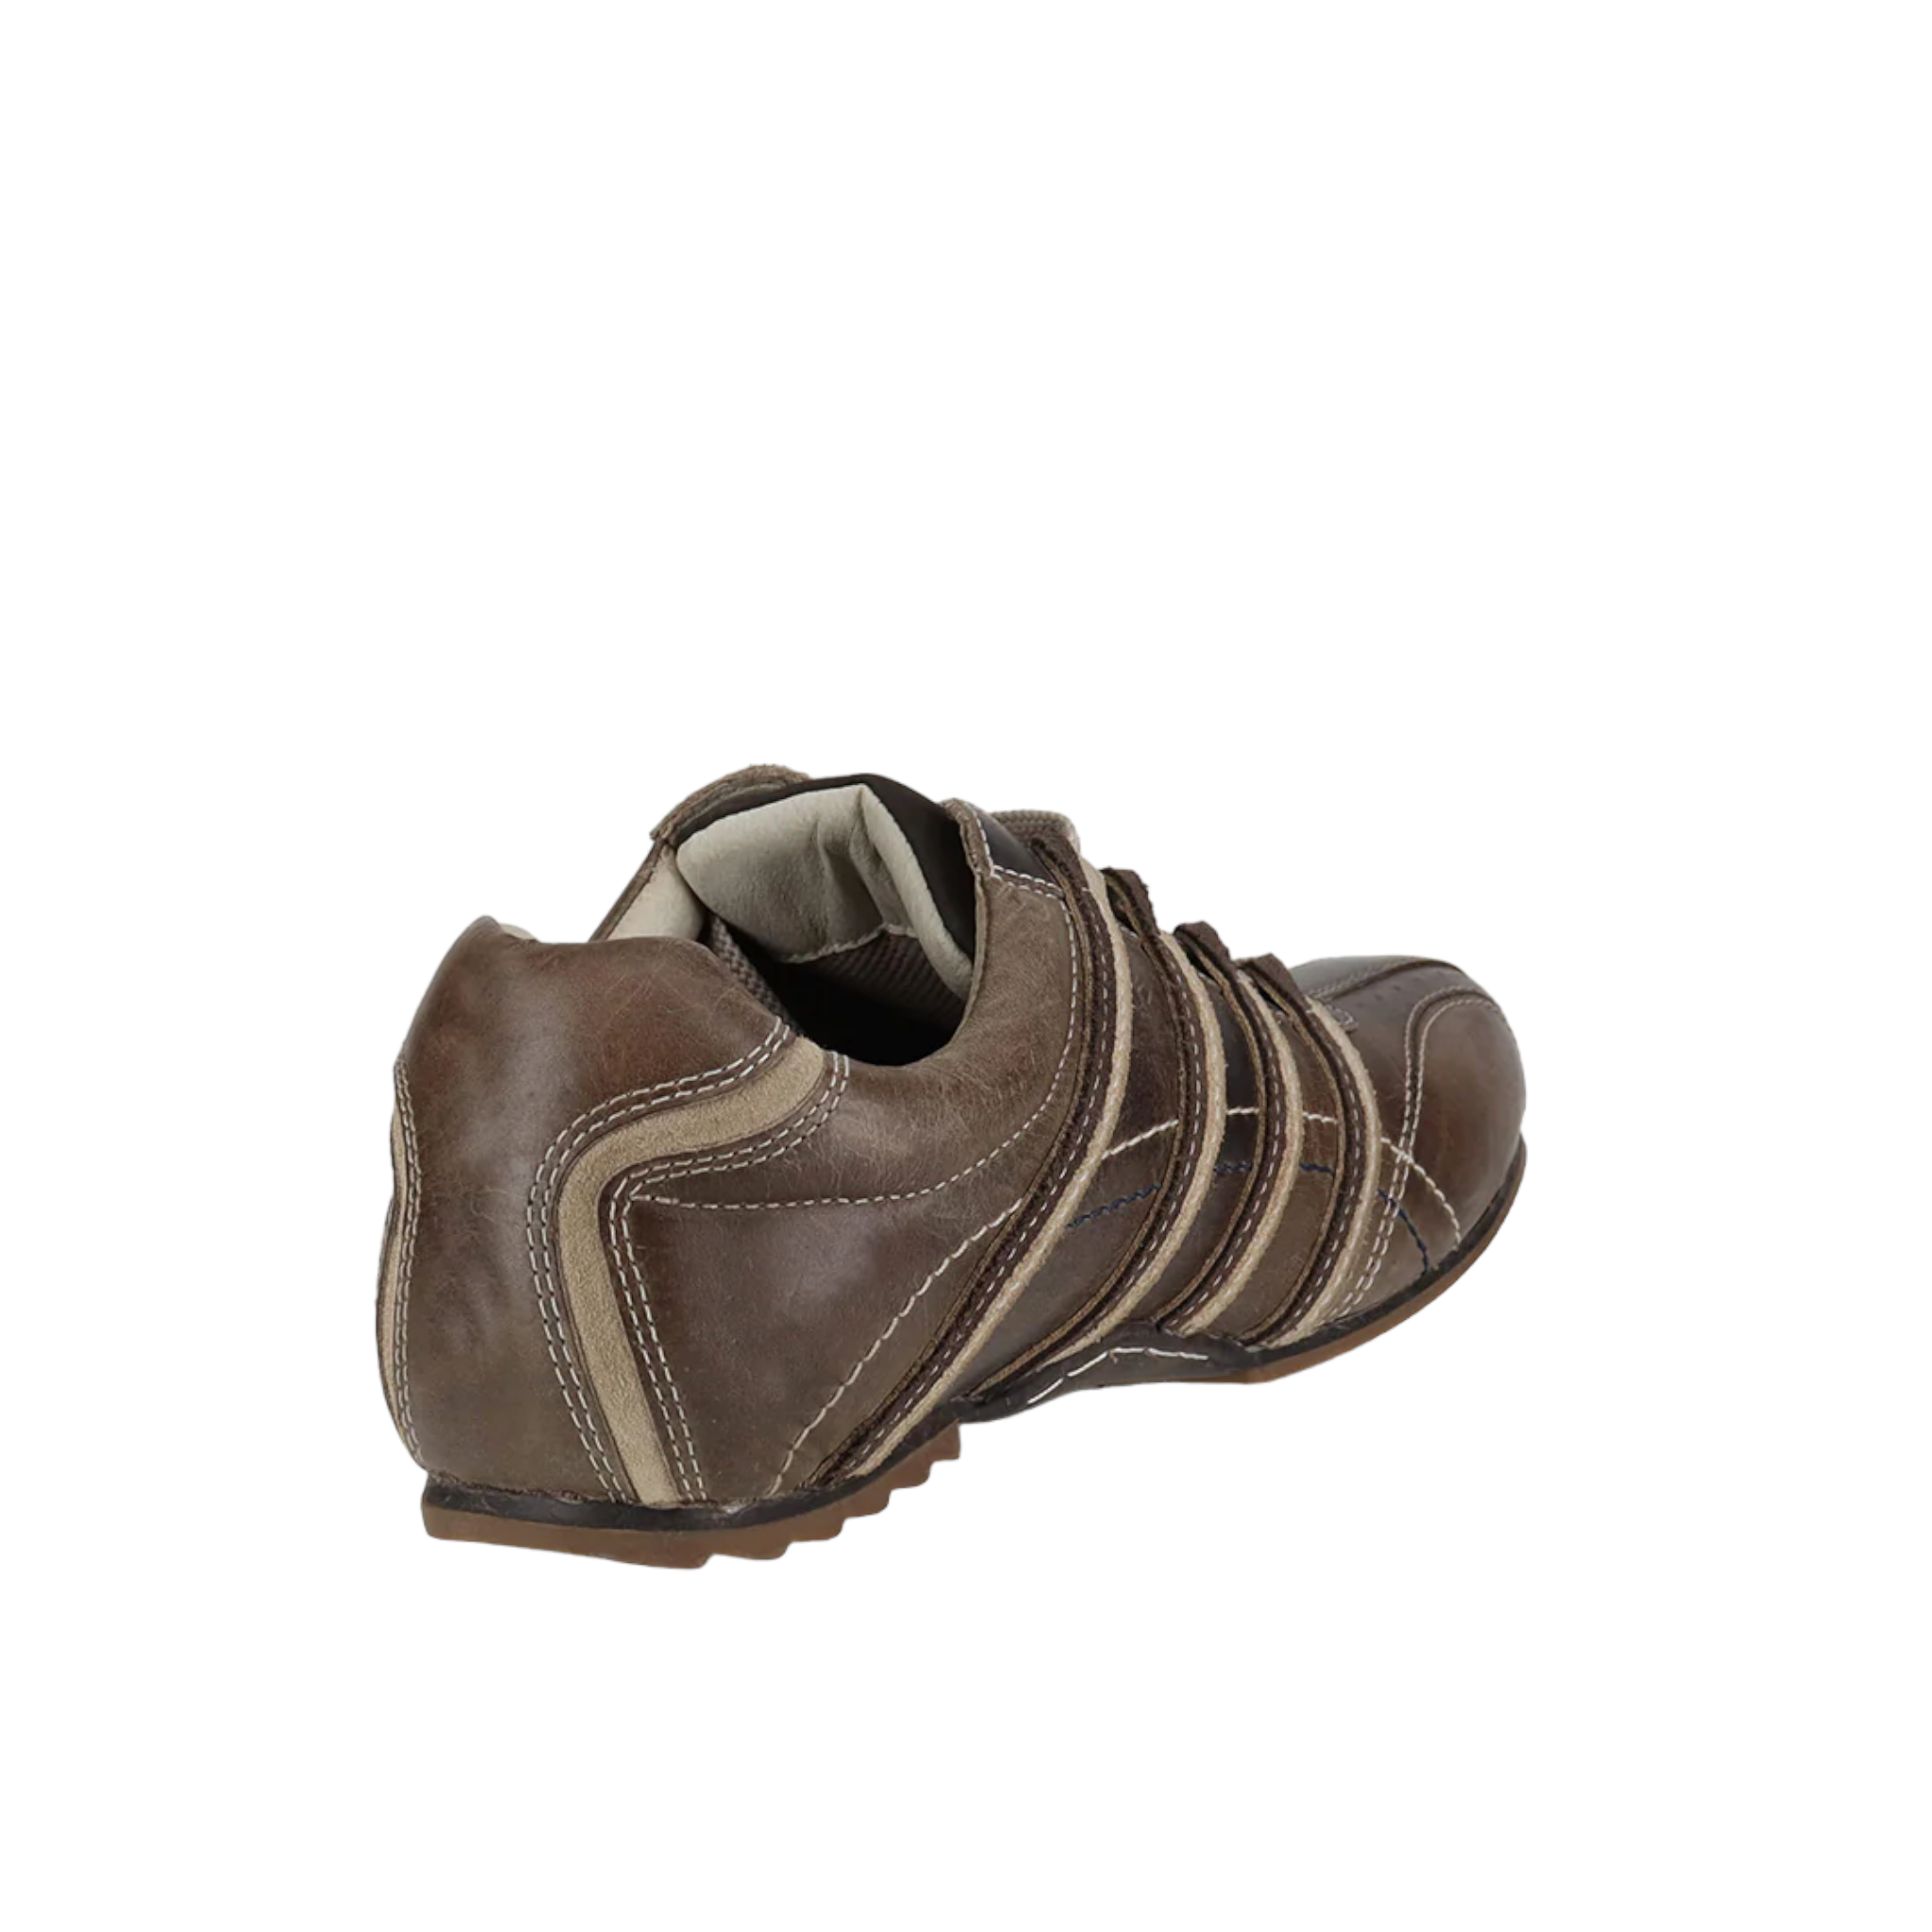 Kaka Mens - shoe&amp;me - Wild Rhino - Shoe - Mens, Shoes, Winter